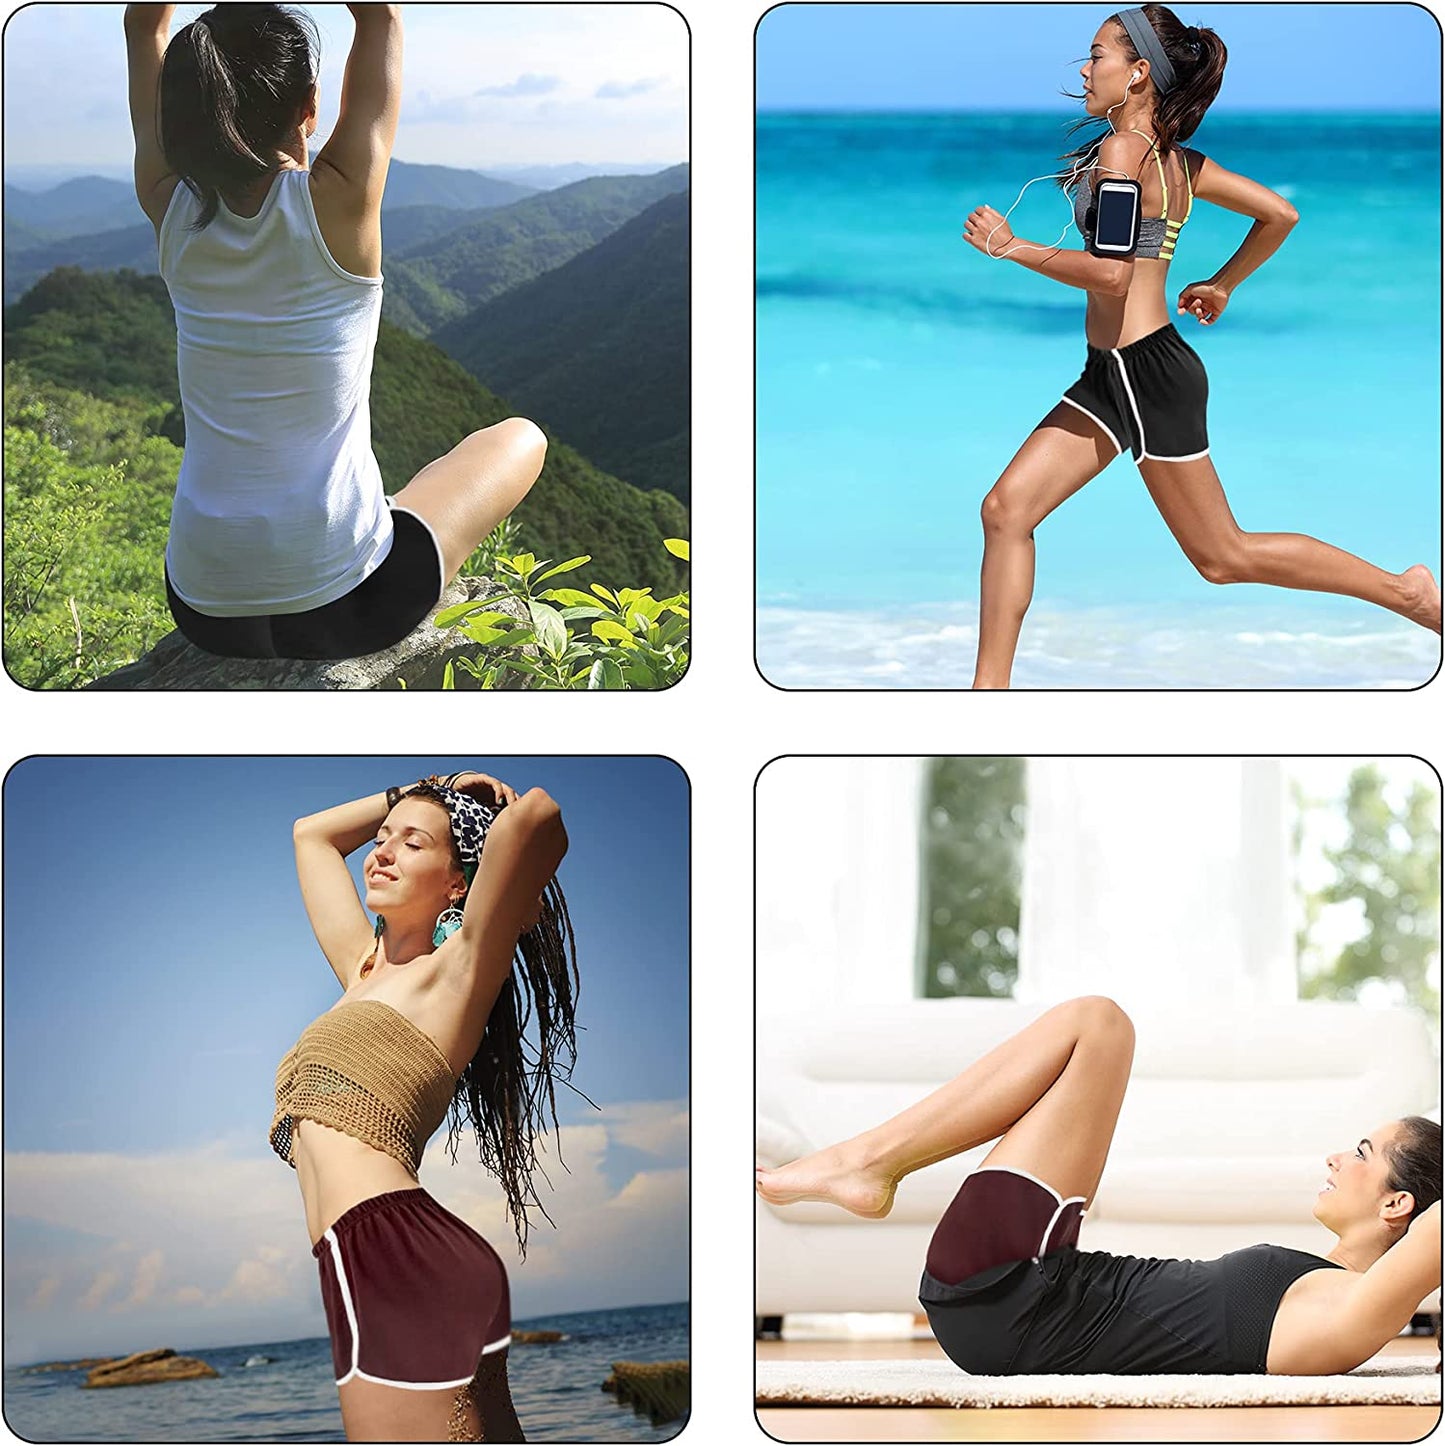 5 Pack Cotton Sports Shorts Yoga Short Pants Summer Running Athletic Shorts for Women